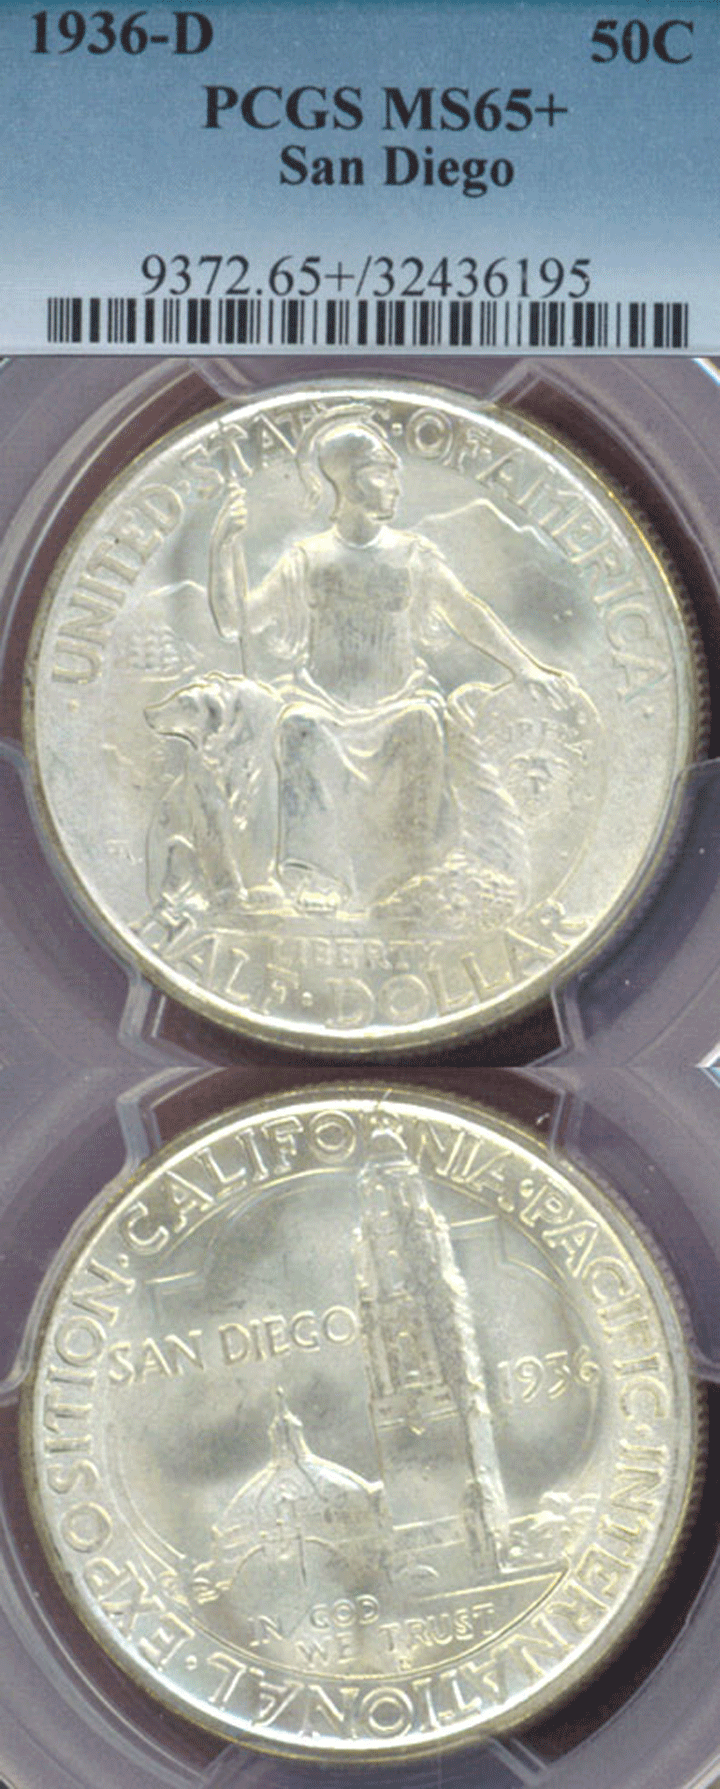 1936-D San Diego US silver commemorative half dollar PCGS MS 65+